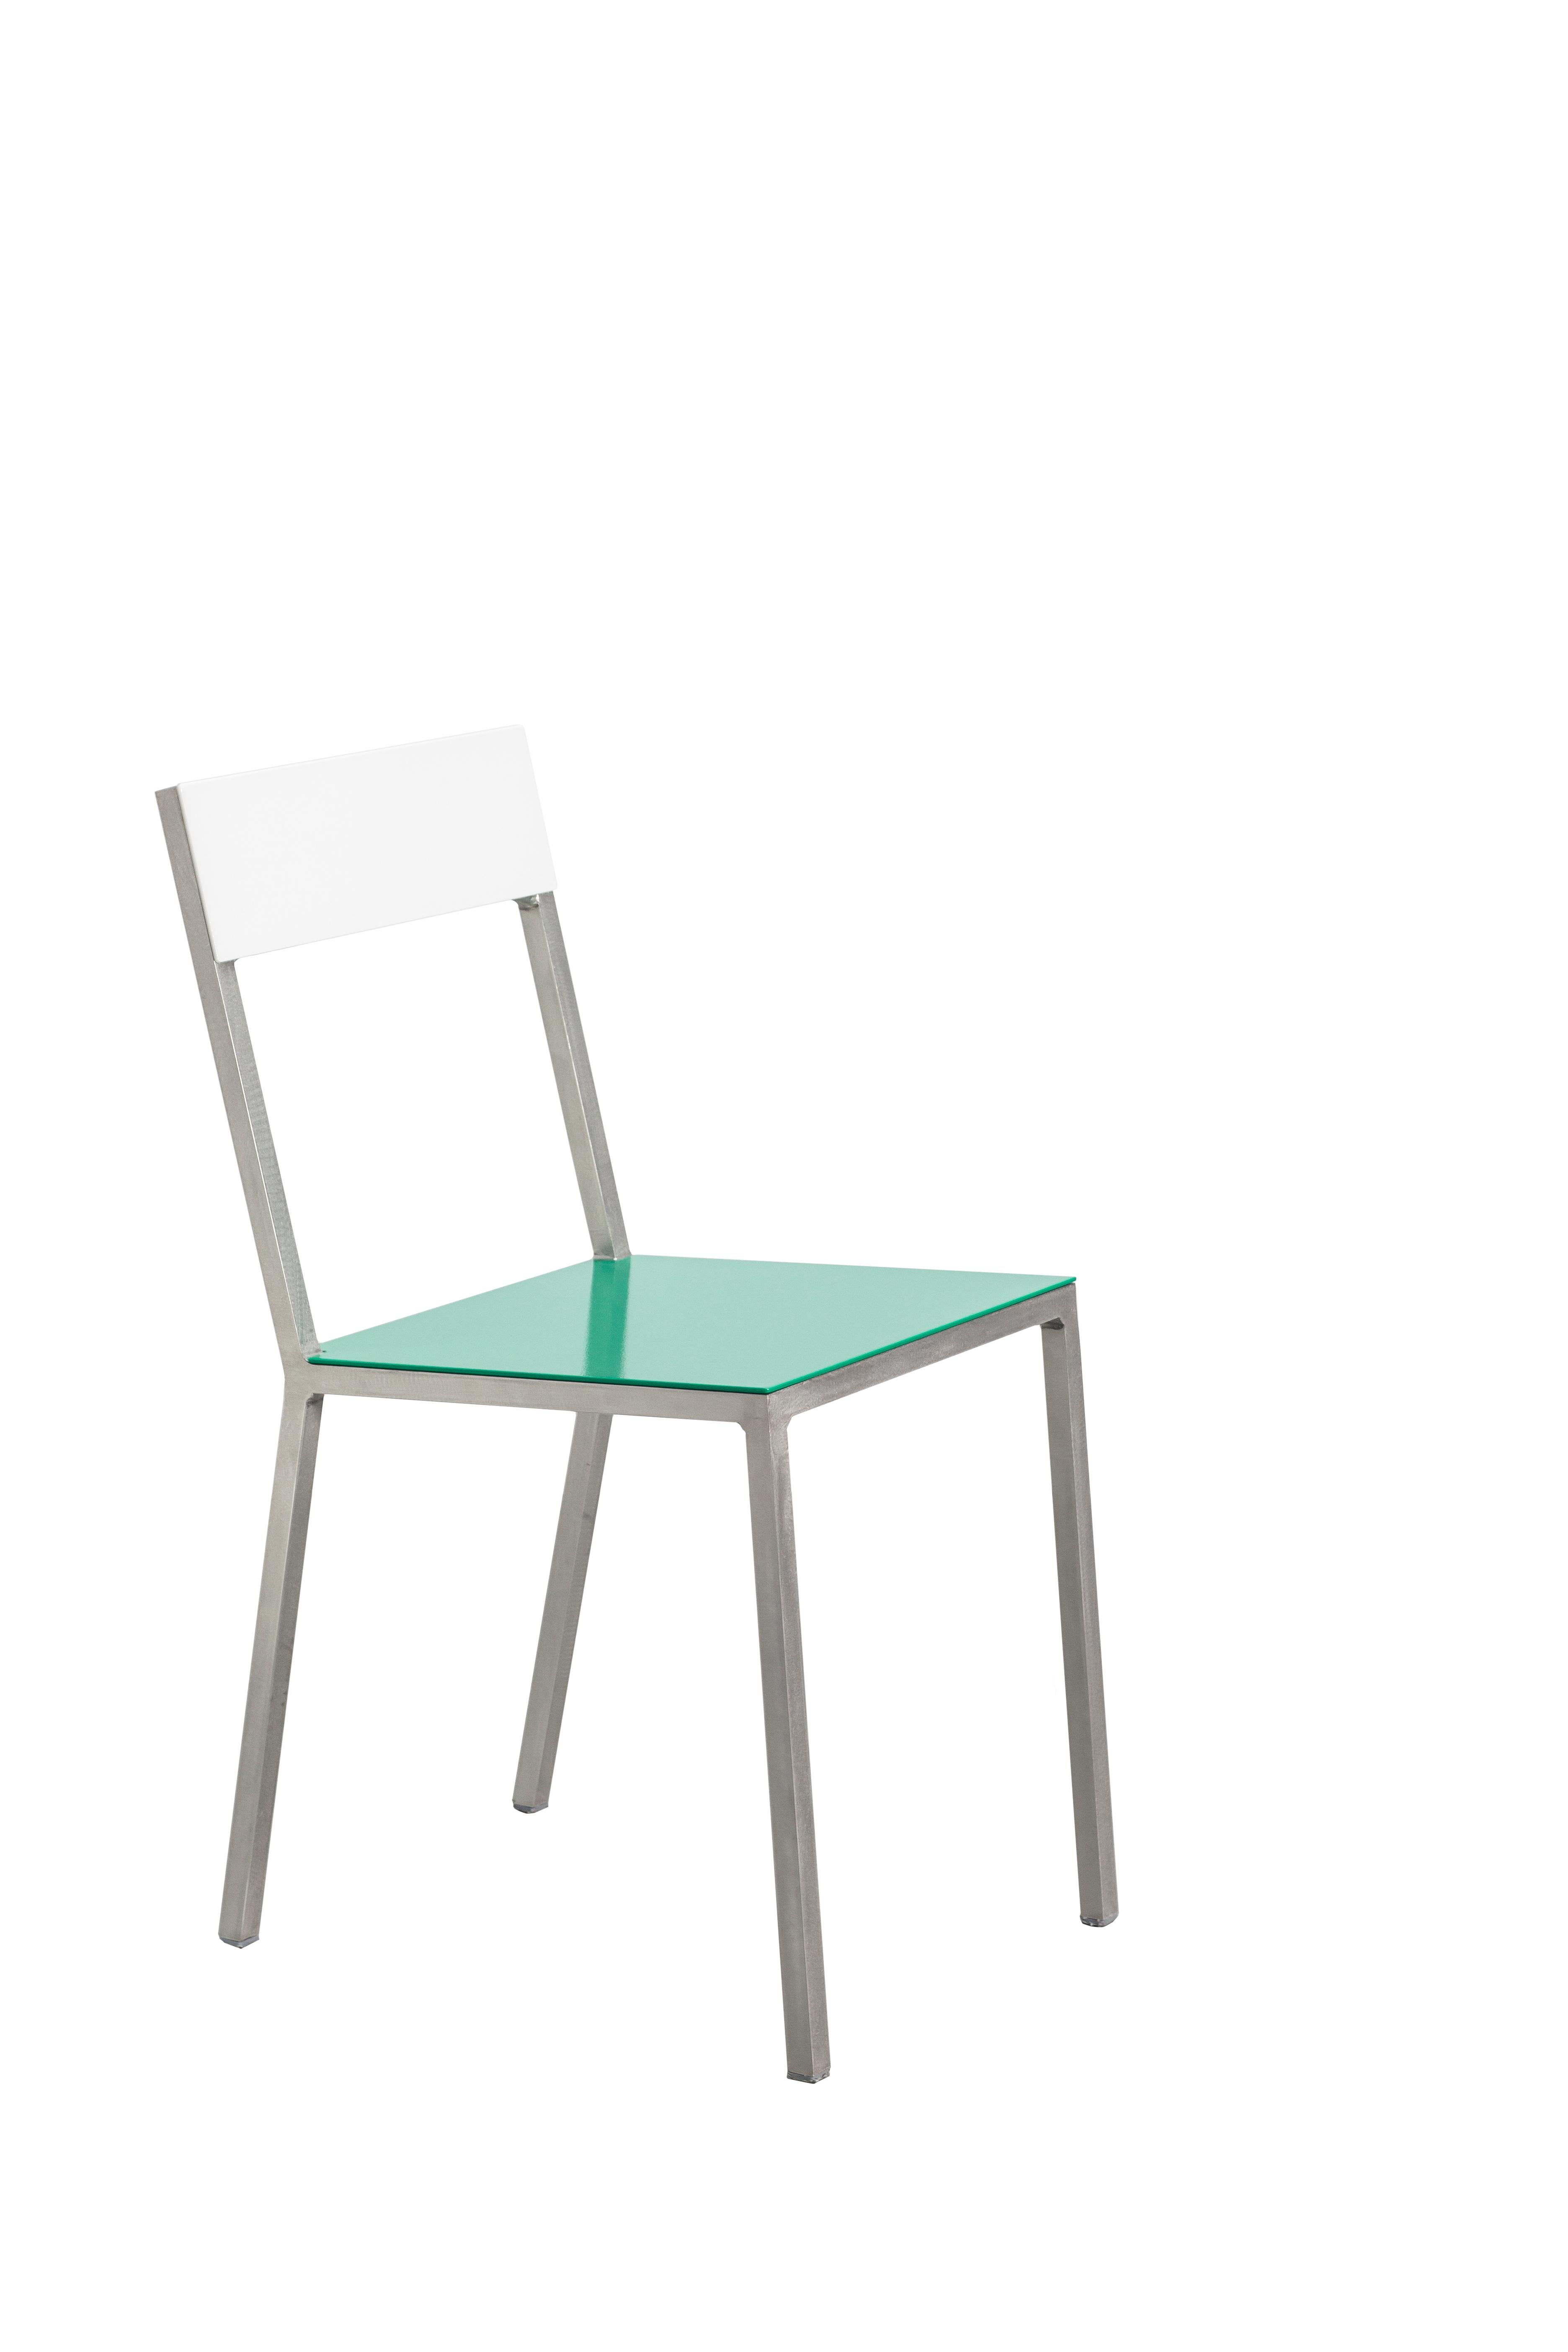 XXIe siècle et contemporain Contemporary Chair 'ALU' by Muller Van Severen x Valery Objetcs, Red + Curry en vente